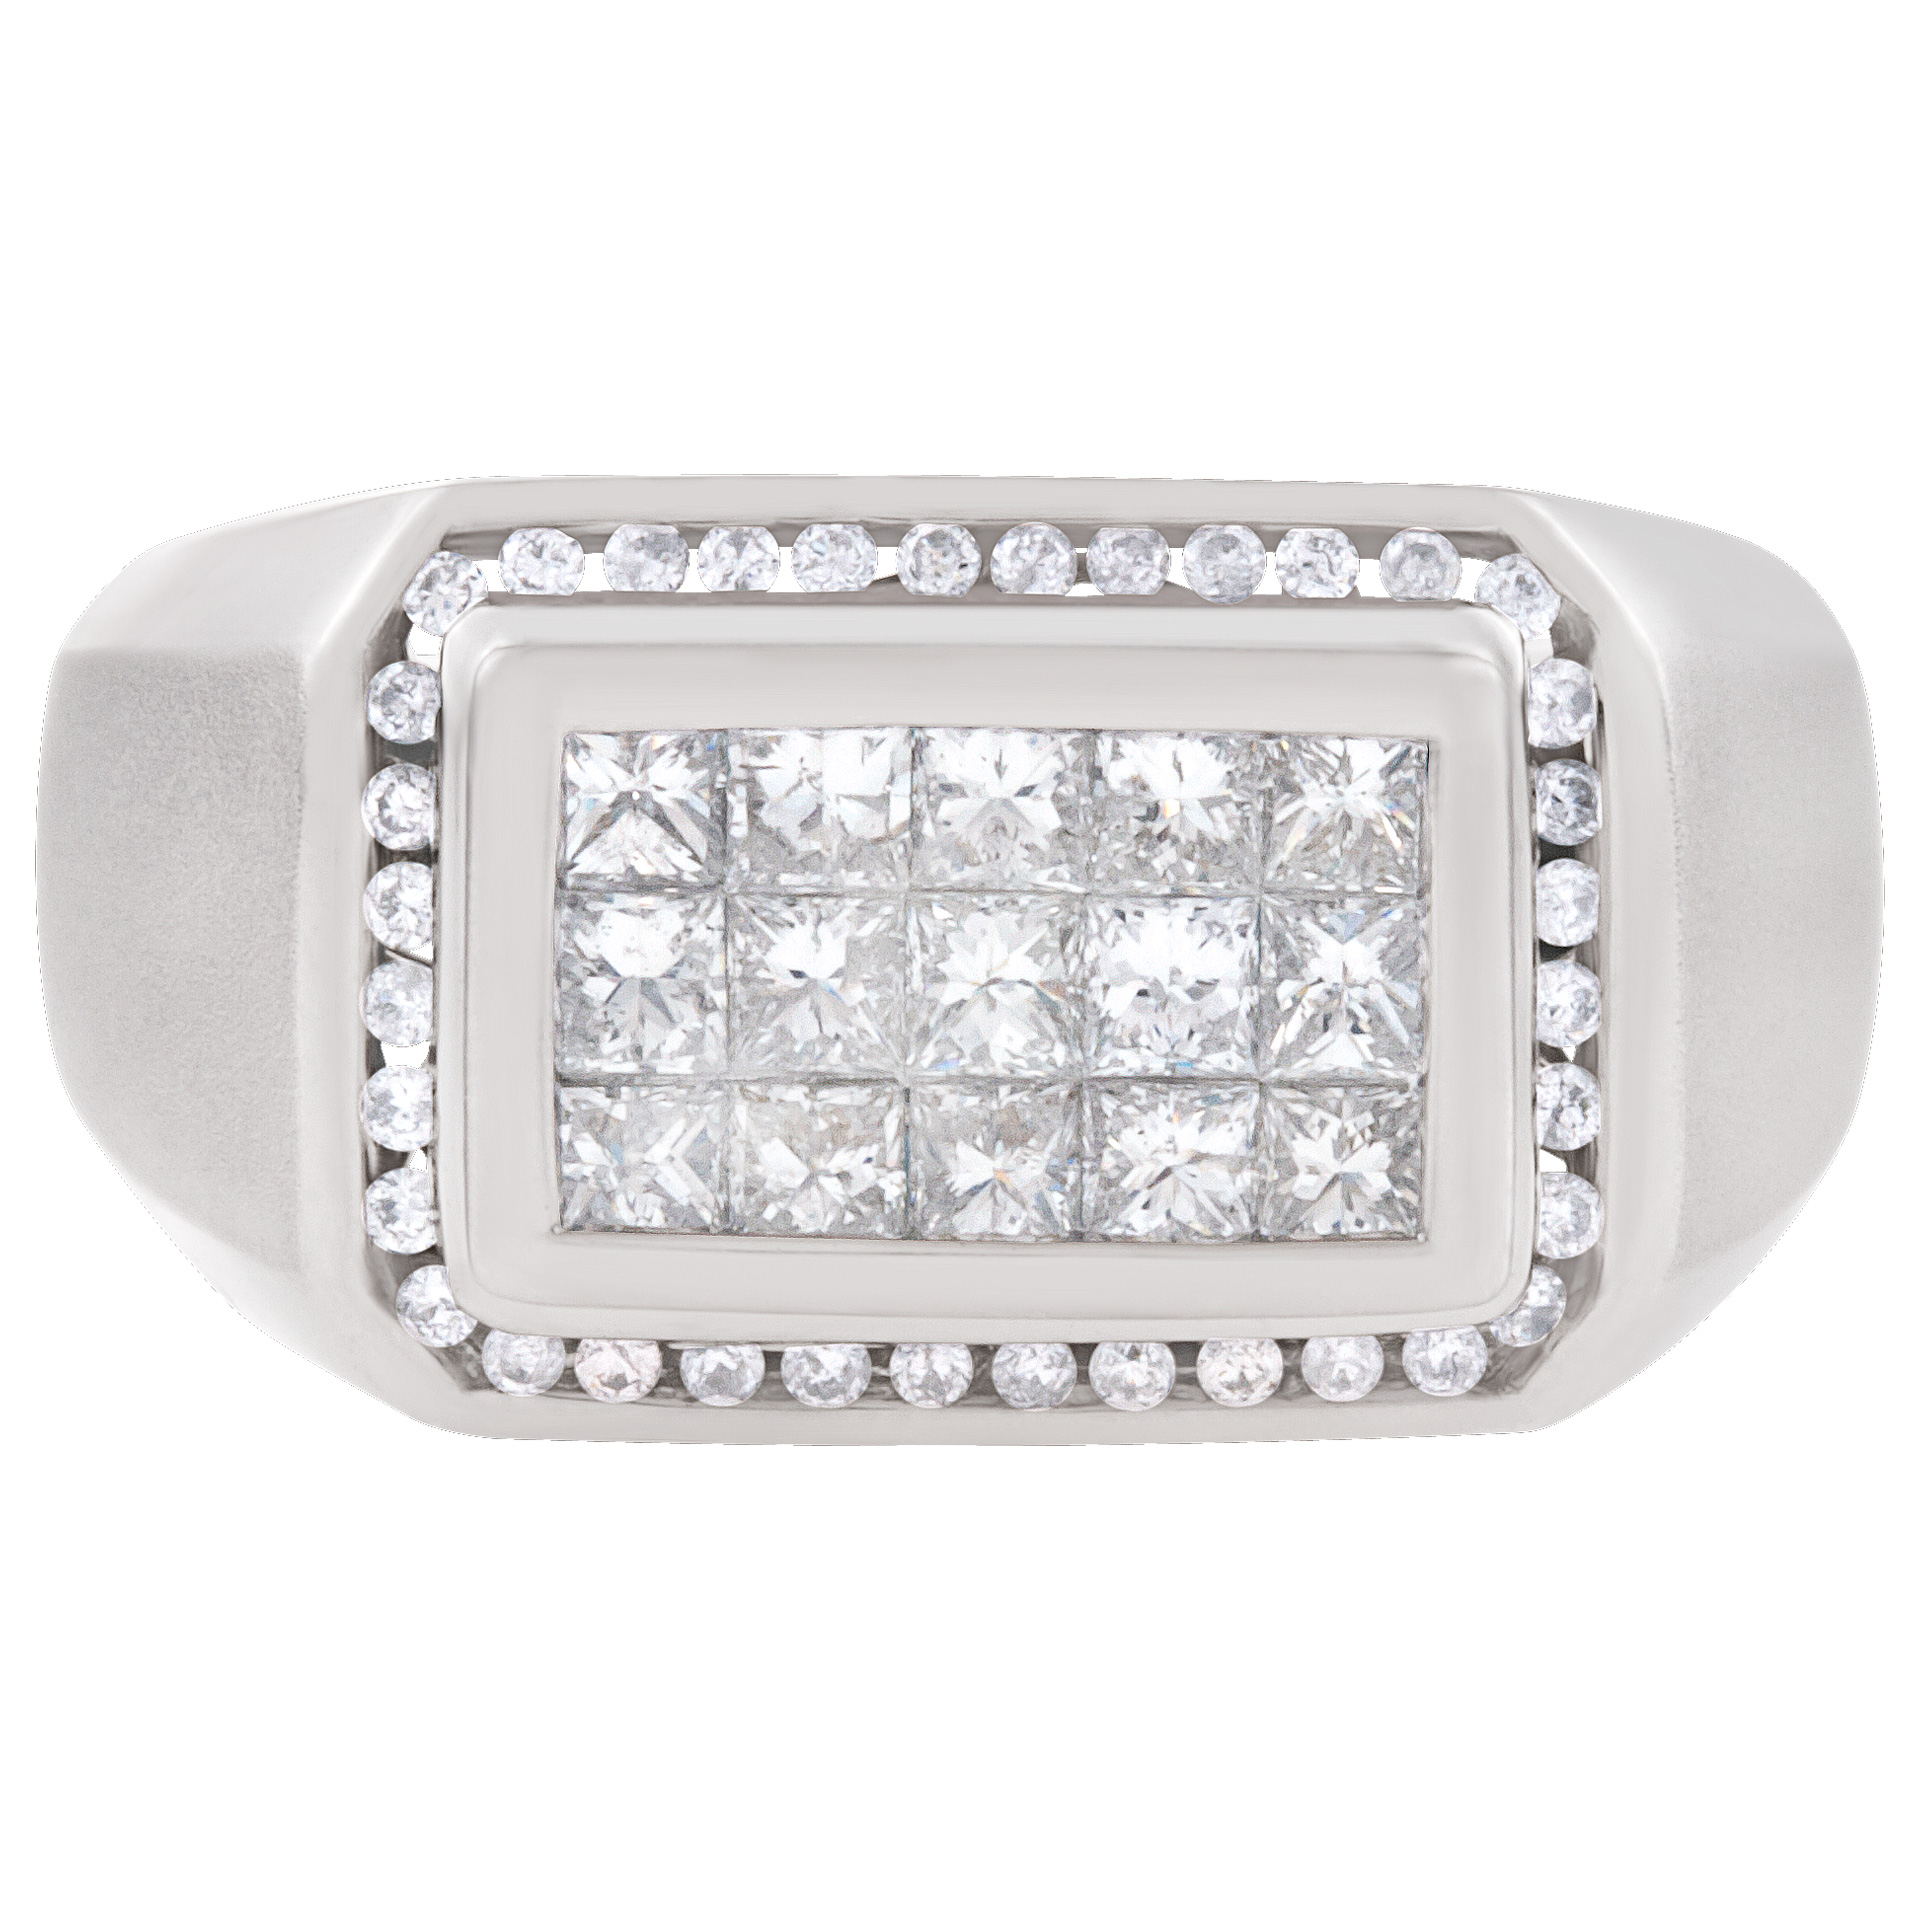 Diamond ring in 18k white gold. 1.51 carats in princess cut & round diamonds image 1